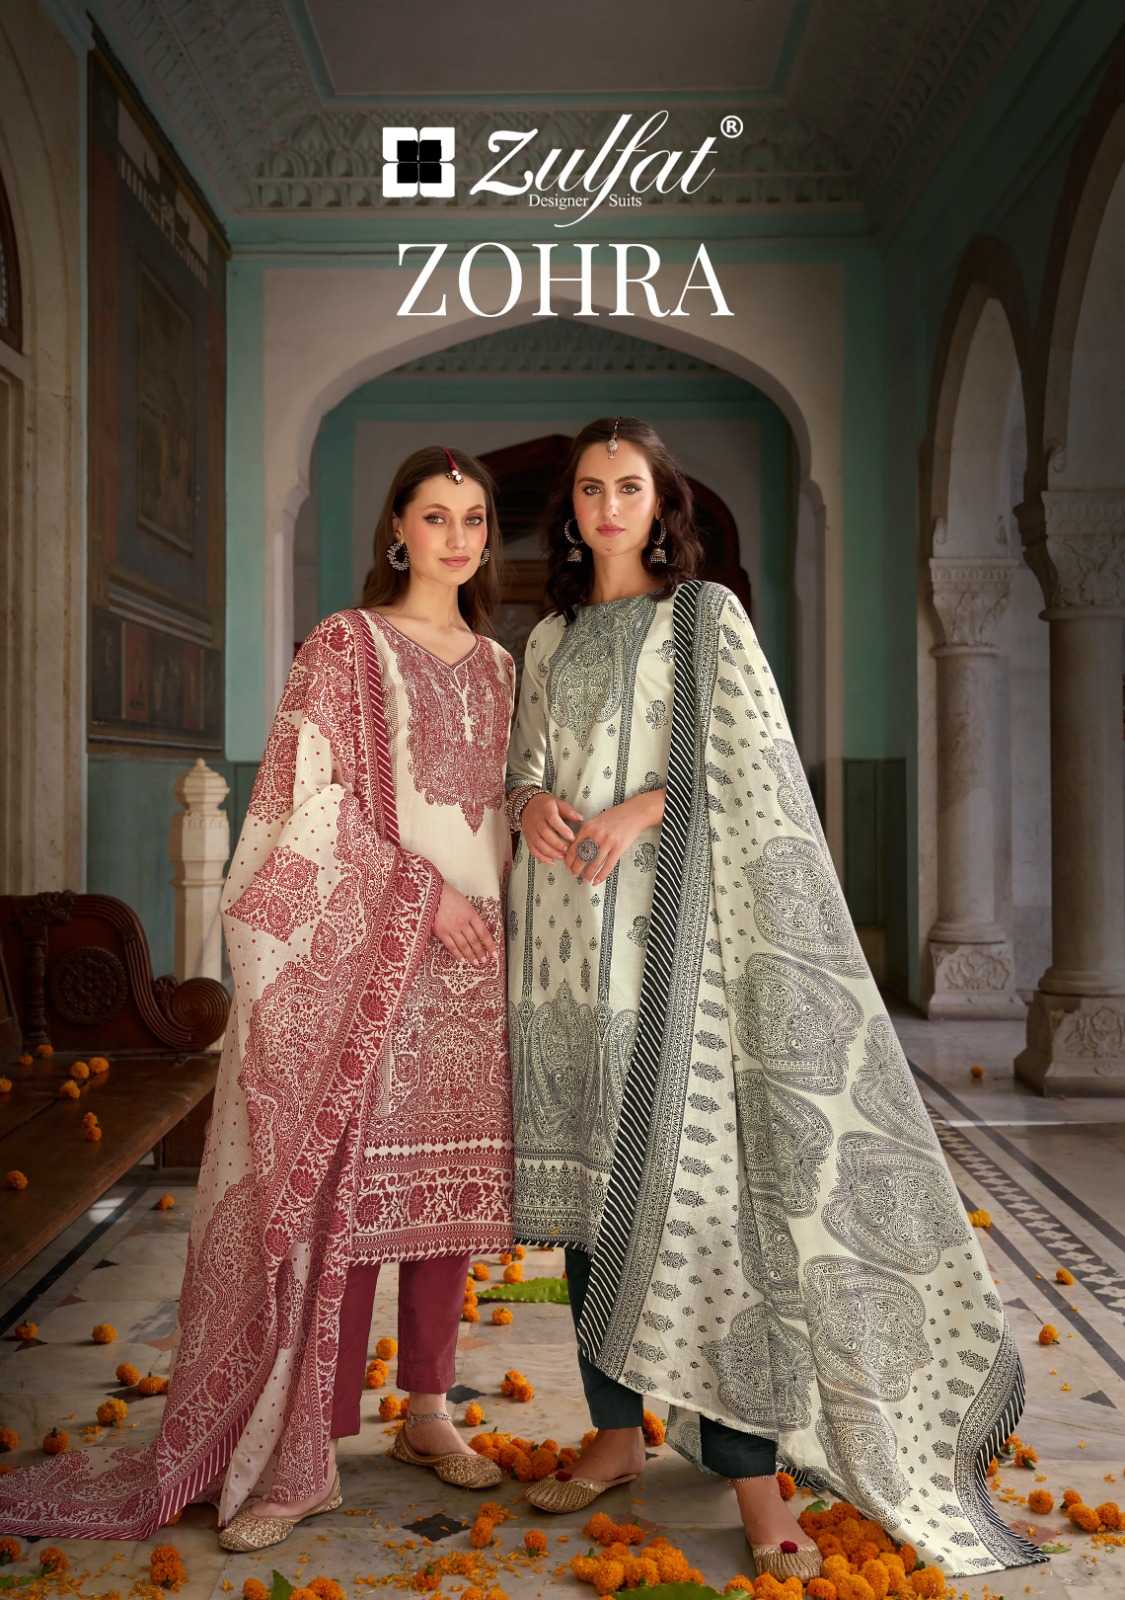 zulfat designer zohra amazing design pakistani salwar kameez collection